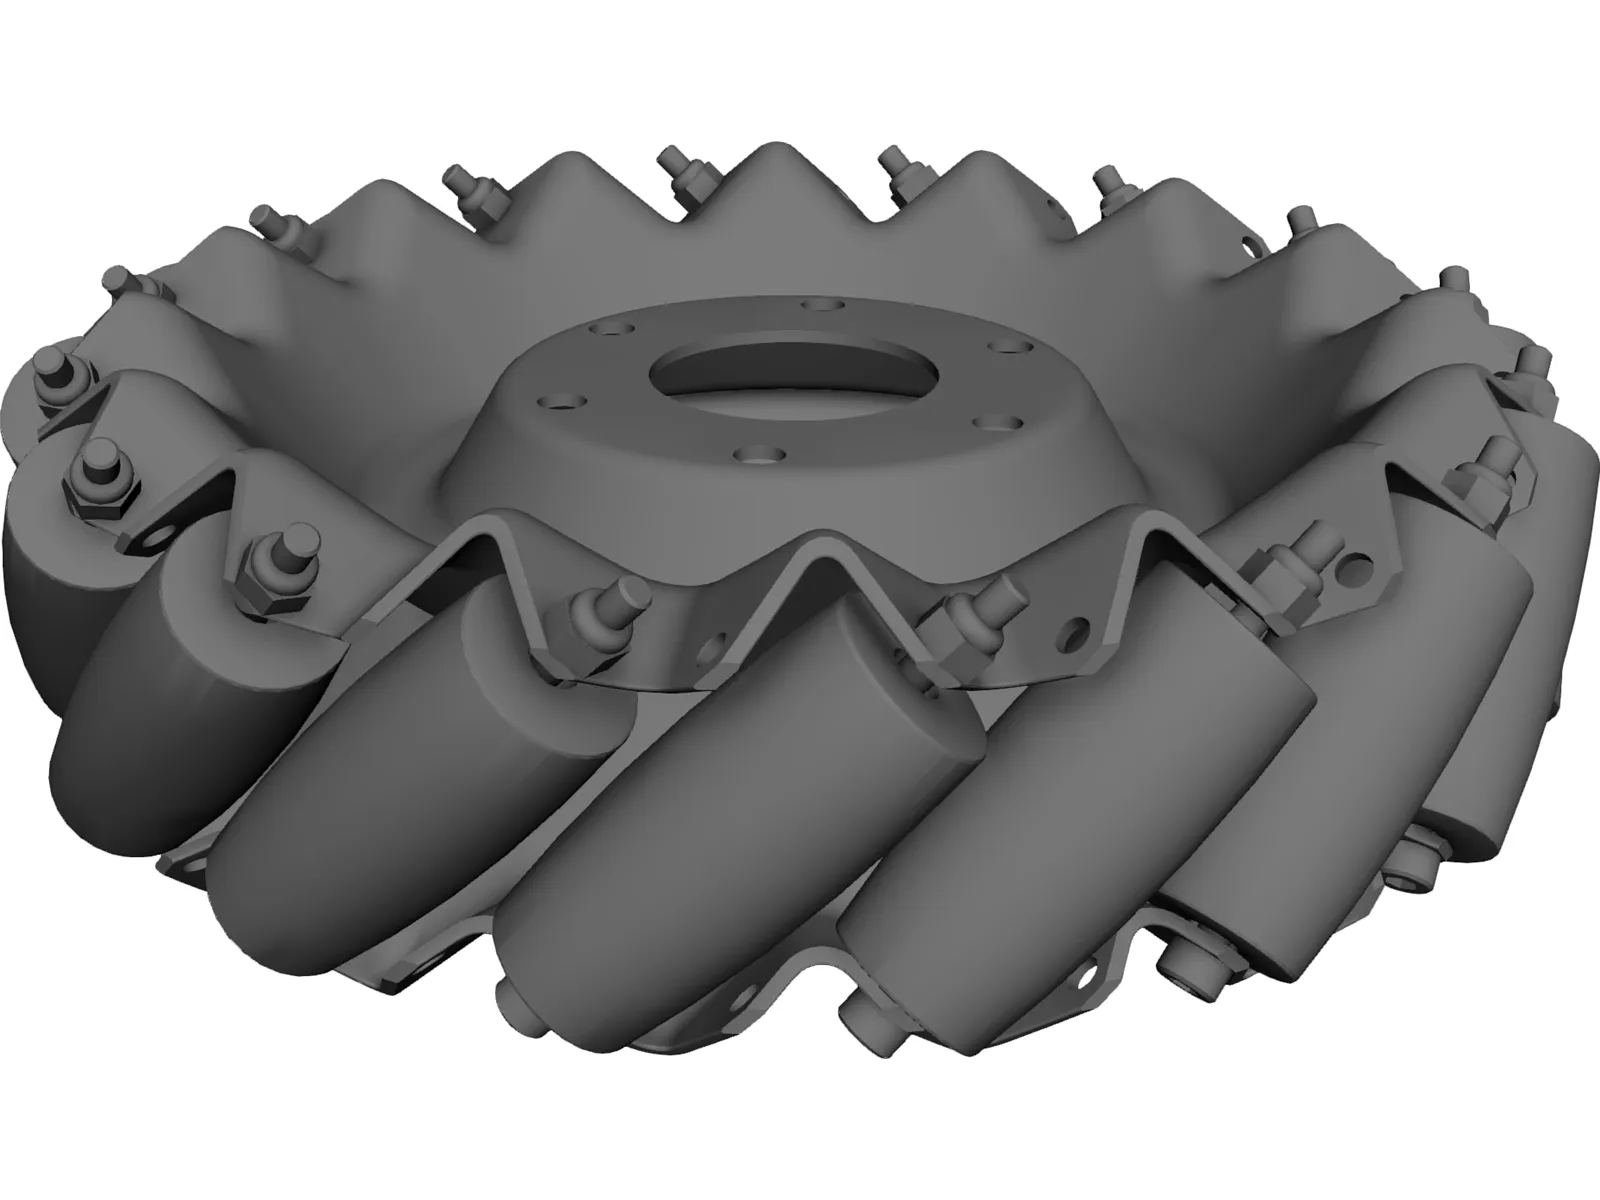 Mecanum Wheel Left 3D Model